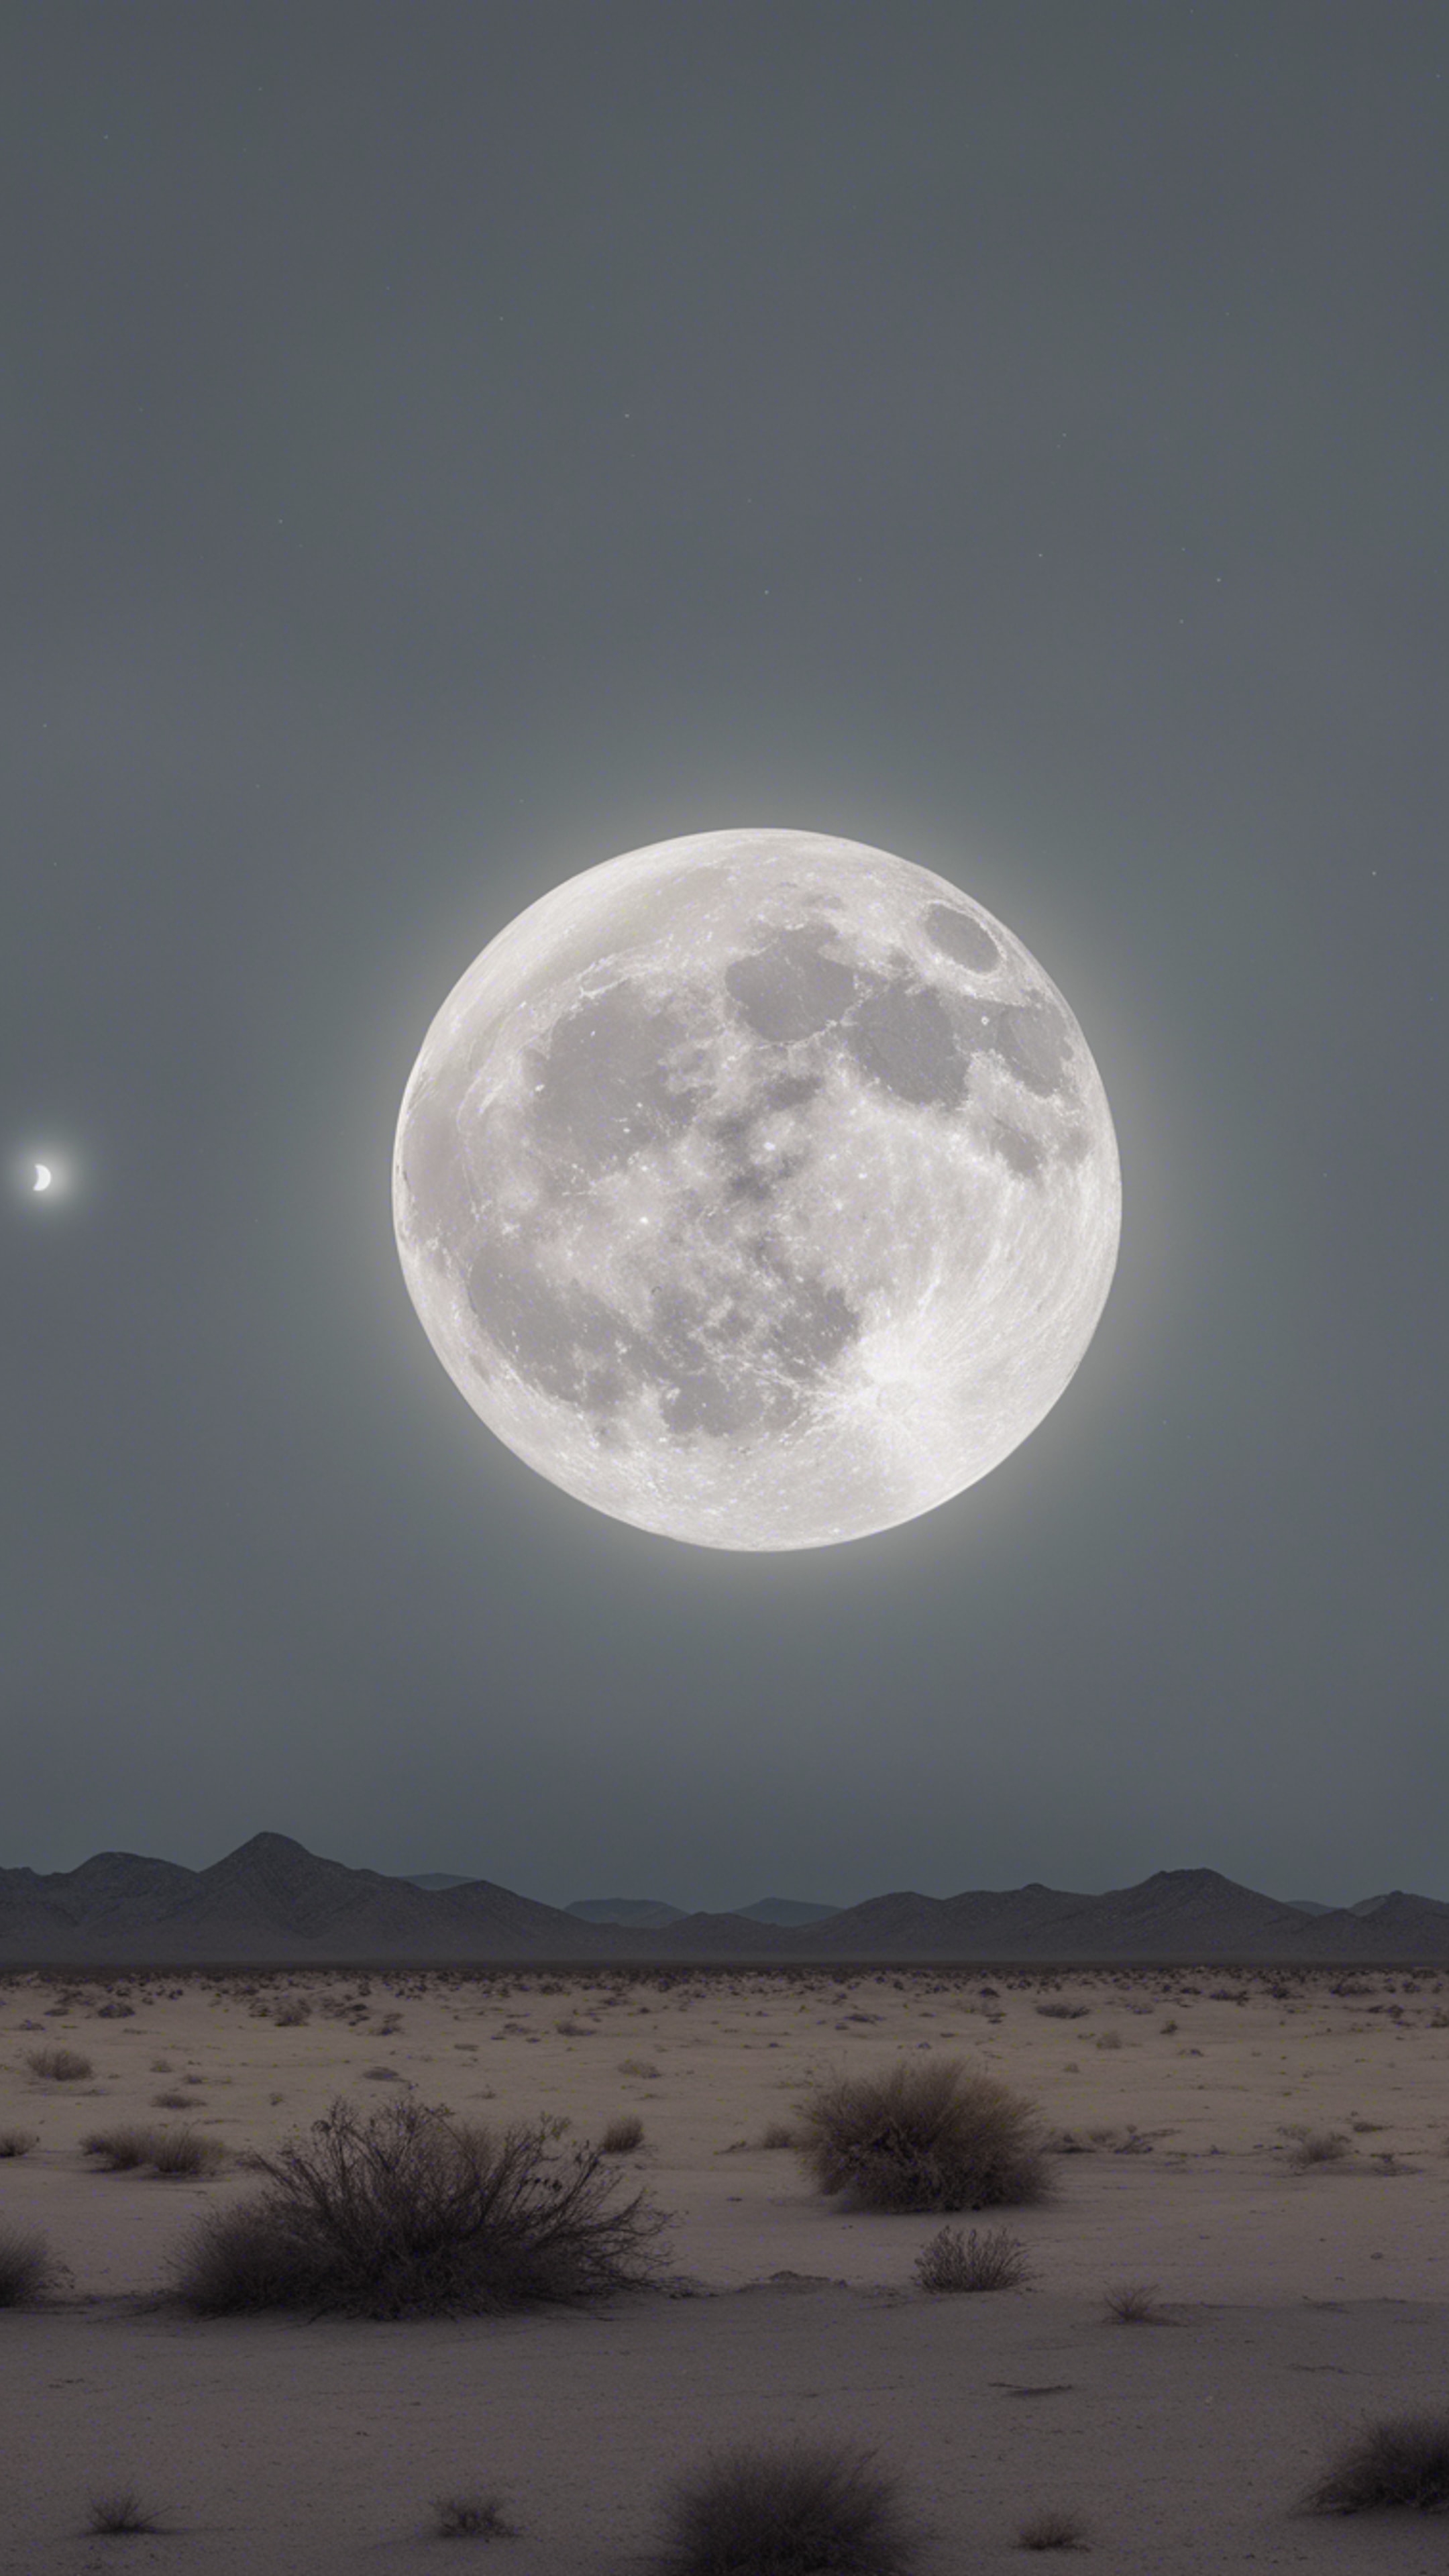 An eerie full moon casting a light gray hue over a desolate desert landscape. ផ្ទាំង​រូបភាព[b219b4d700dc4cdd8b88]